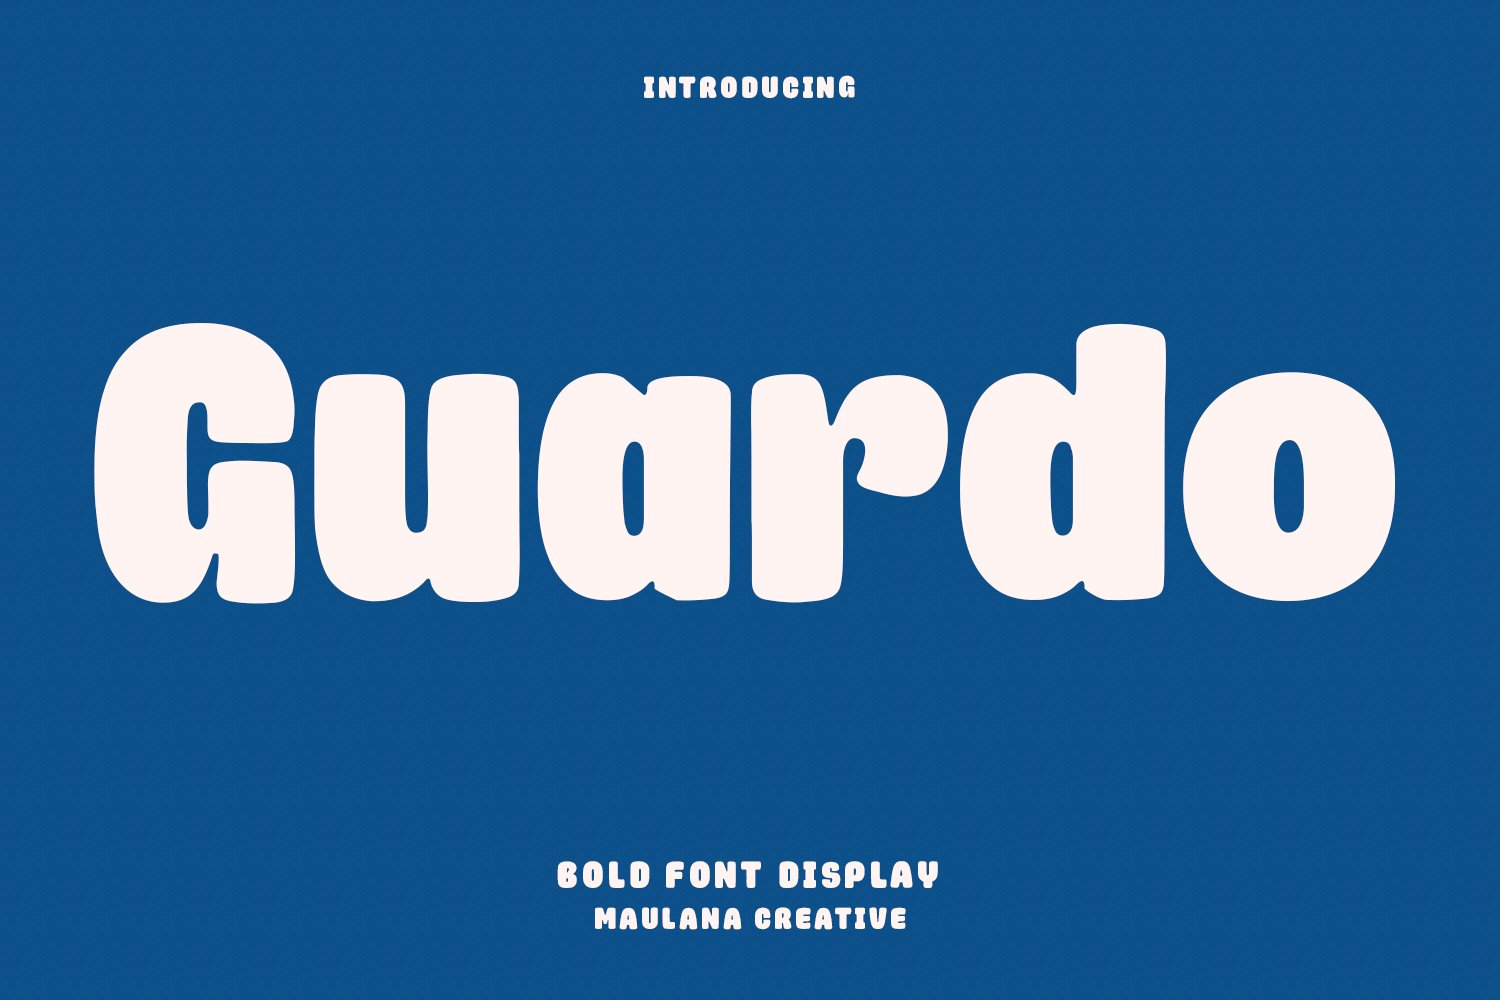 Guardo Display Font cover image.